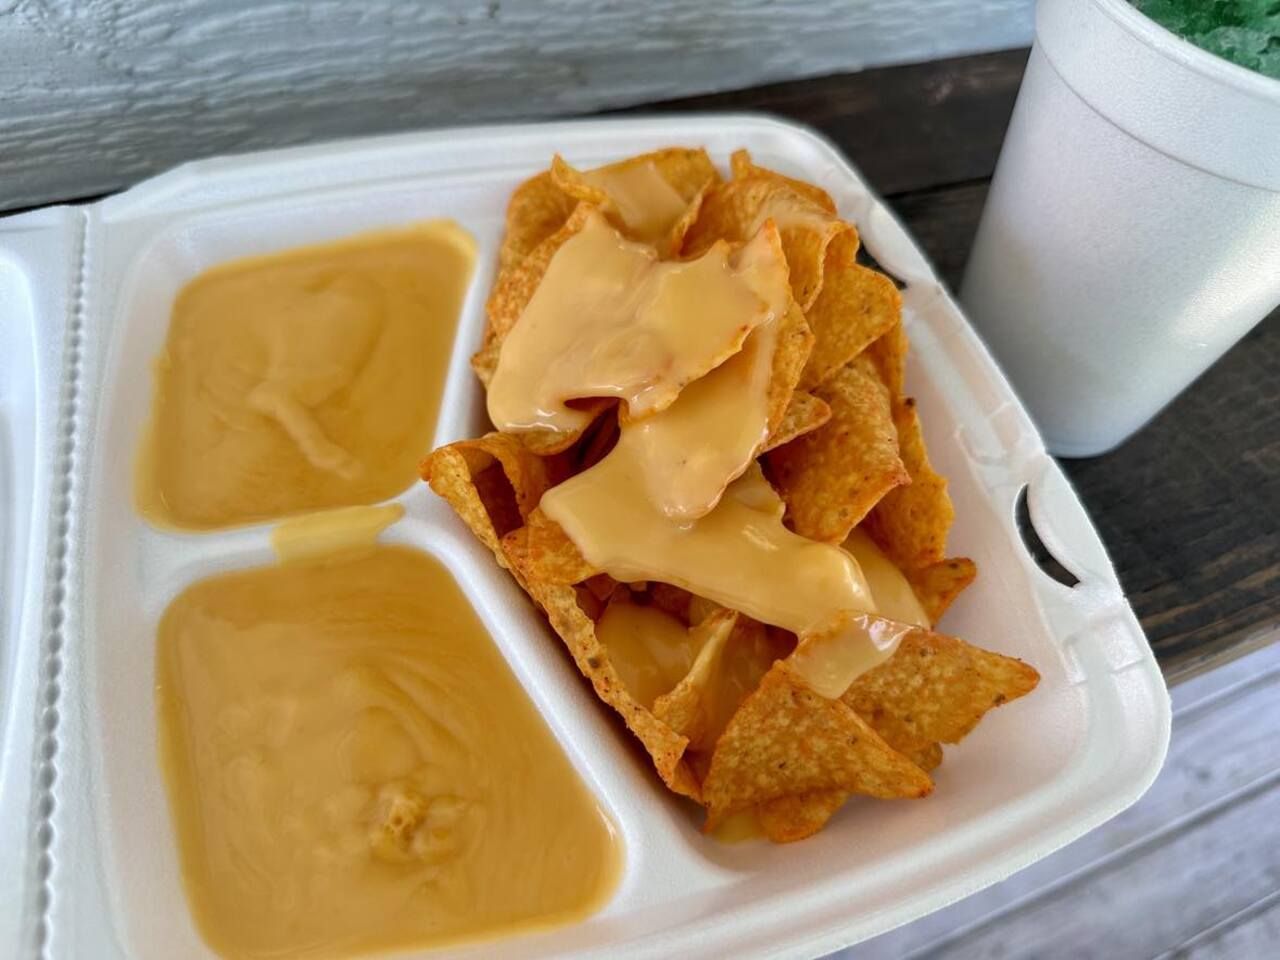 Photo shows a takeout box of nachos